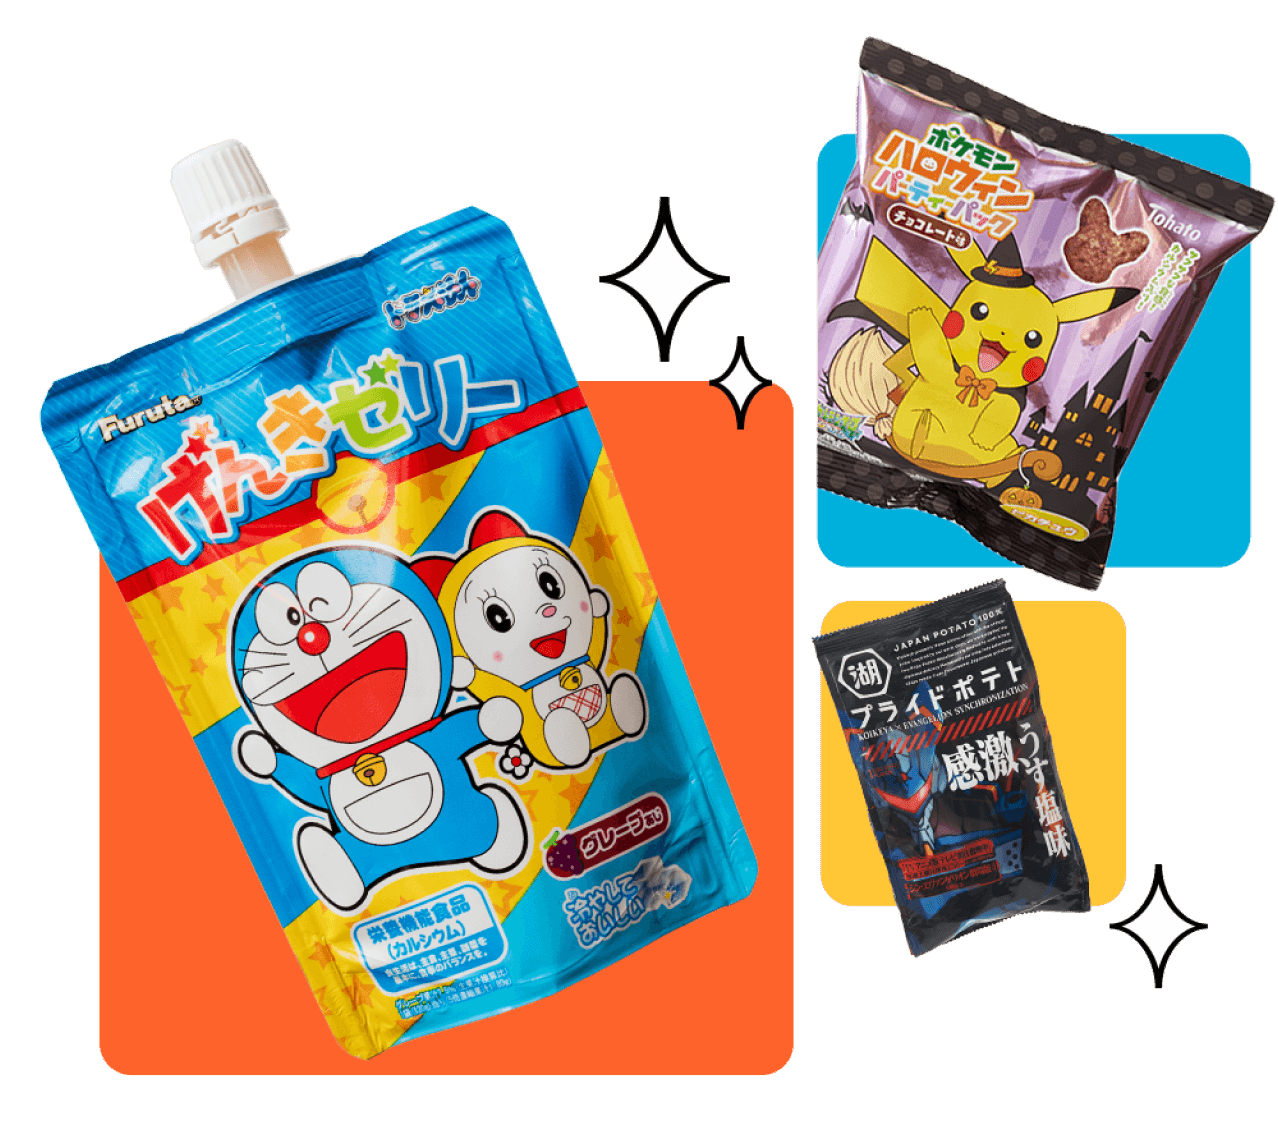 Lots of anime snacks - Doraemon Jelly, Pokemon Halloween, Evangelion potato chips